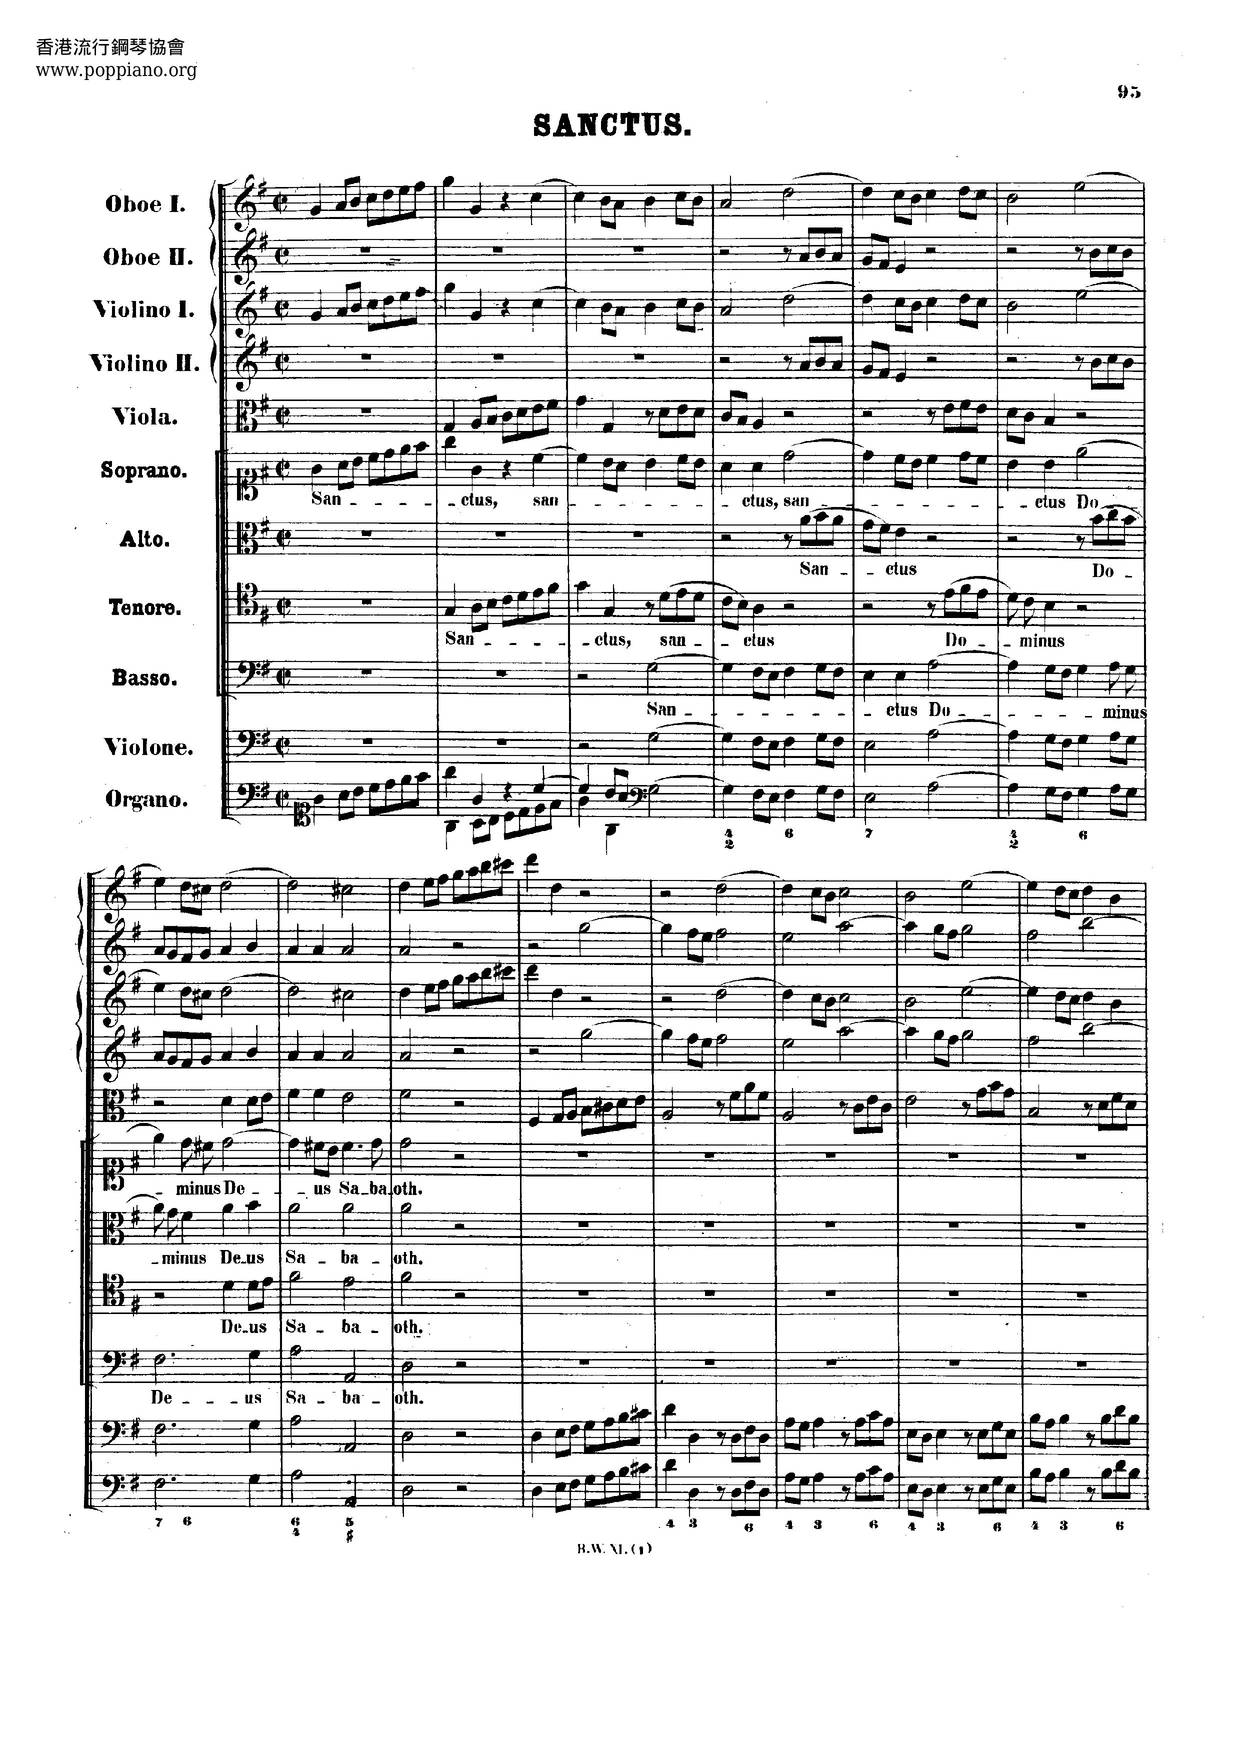 Sanctus In G Major, BWV 240 Score